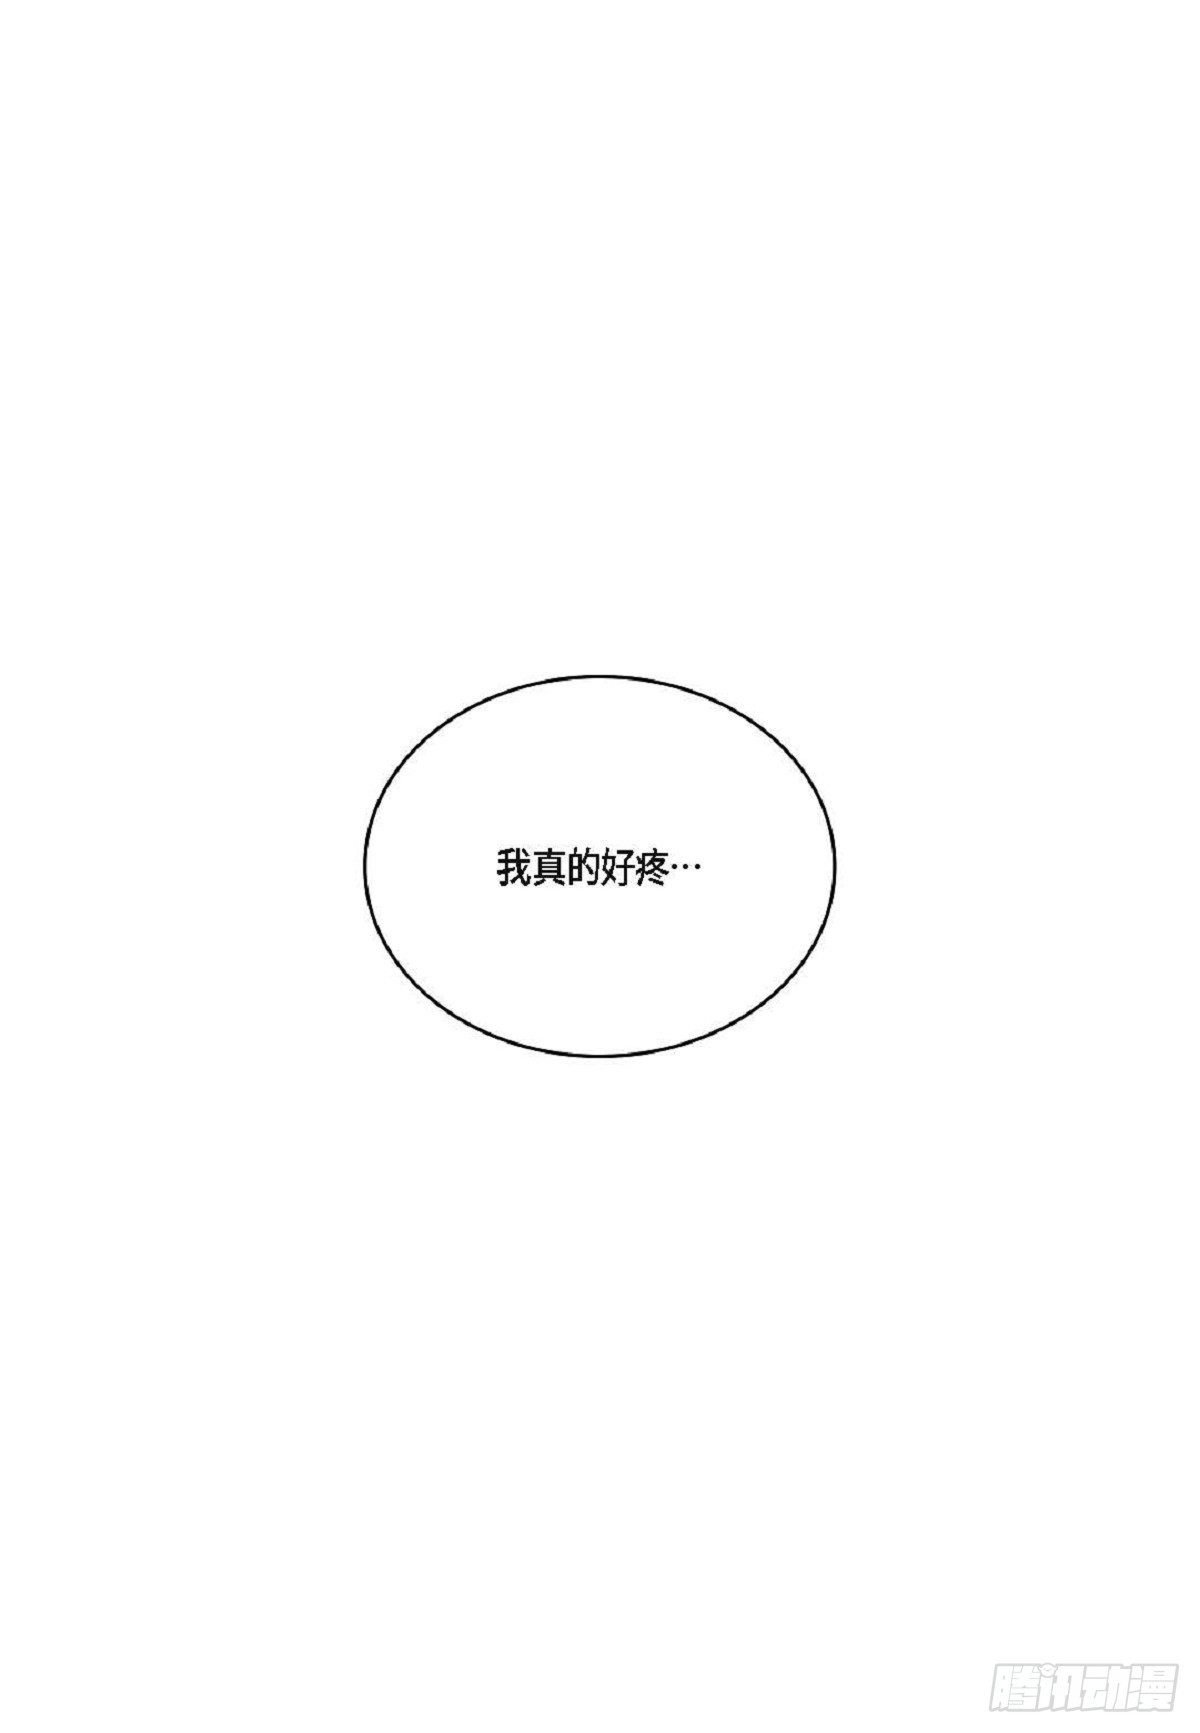 日常多情事 - ep.92(2/2) - 5